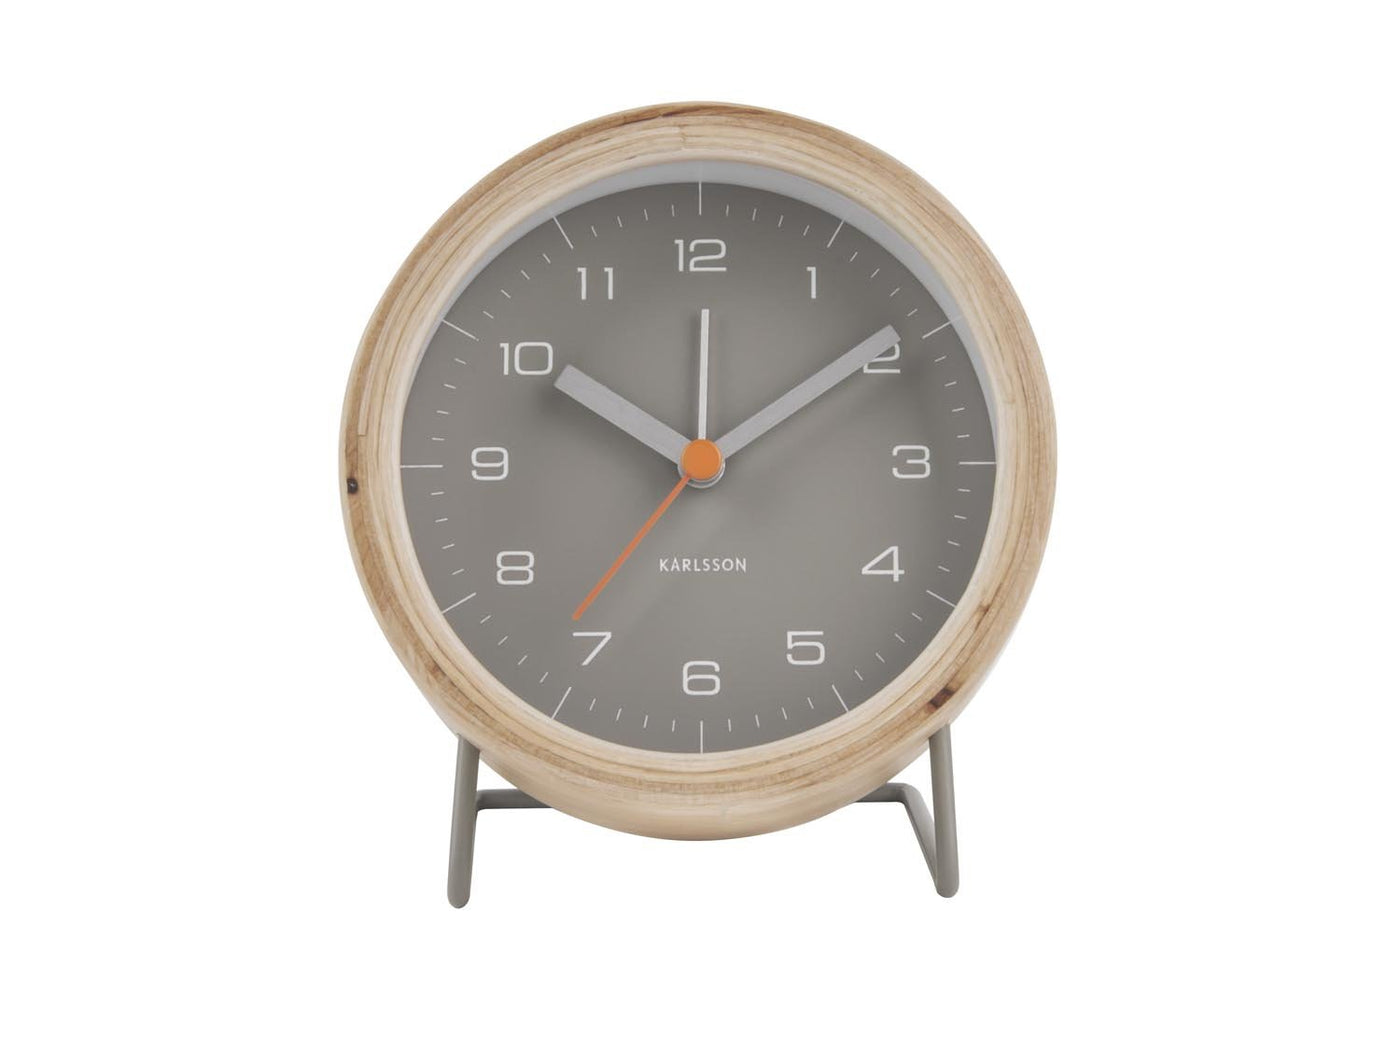 Karlsson Alarm Clock Innate Warm Grey Face Wood Case - timeframedclocks